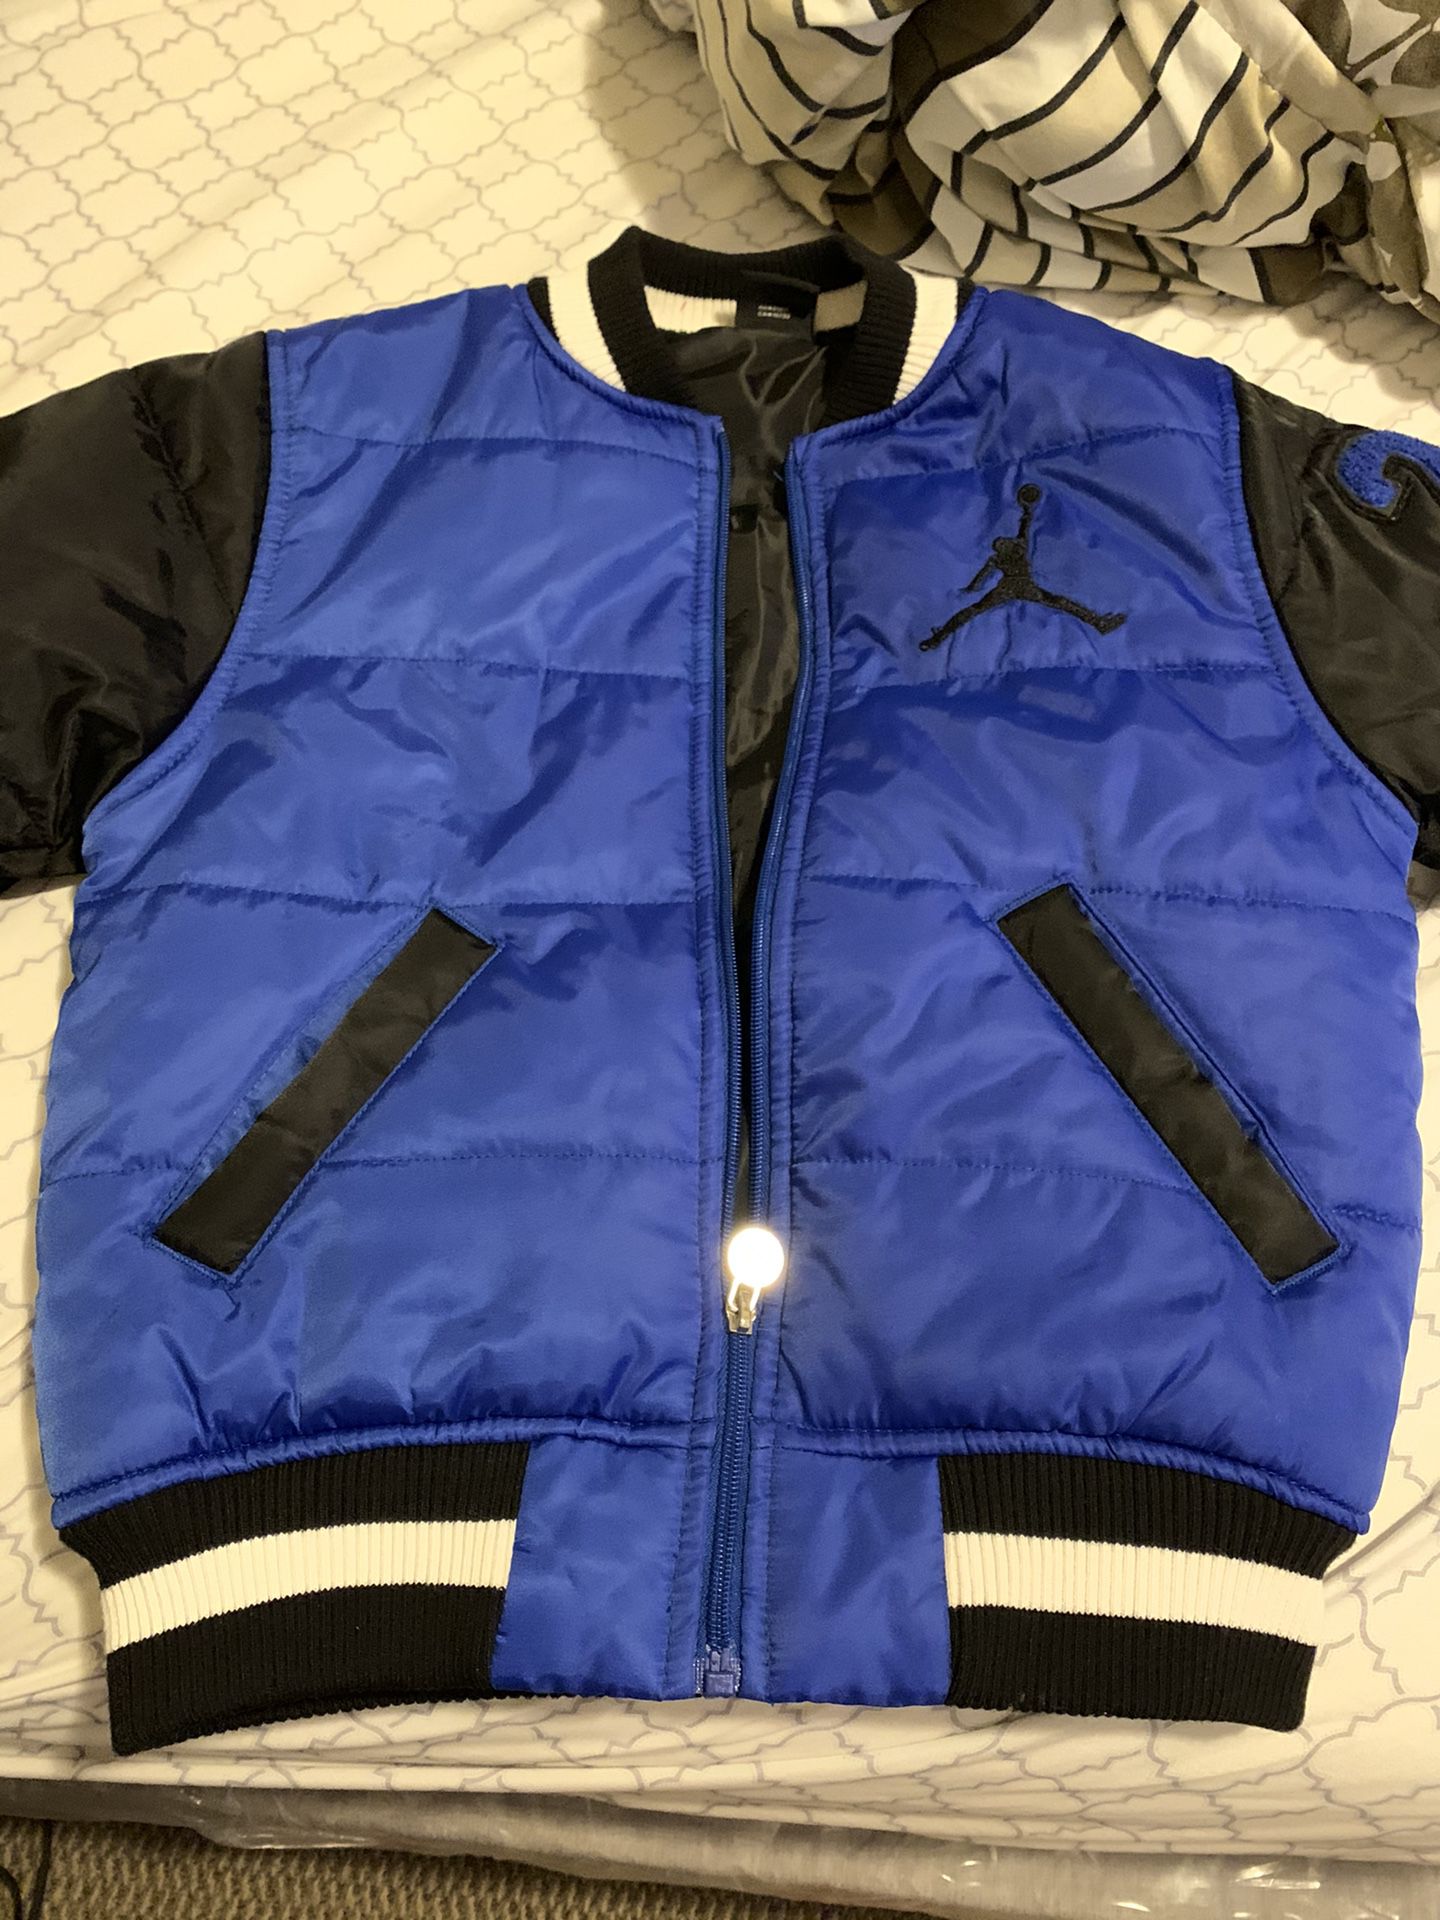 Brand new no tag Jordan jacket for kids size 8/10